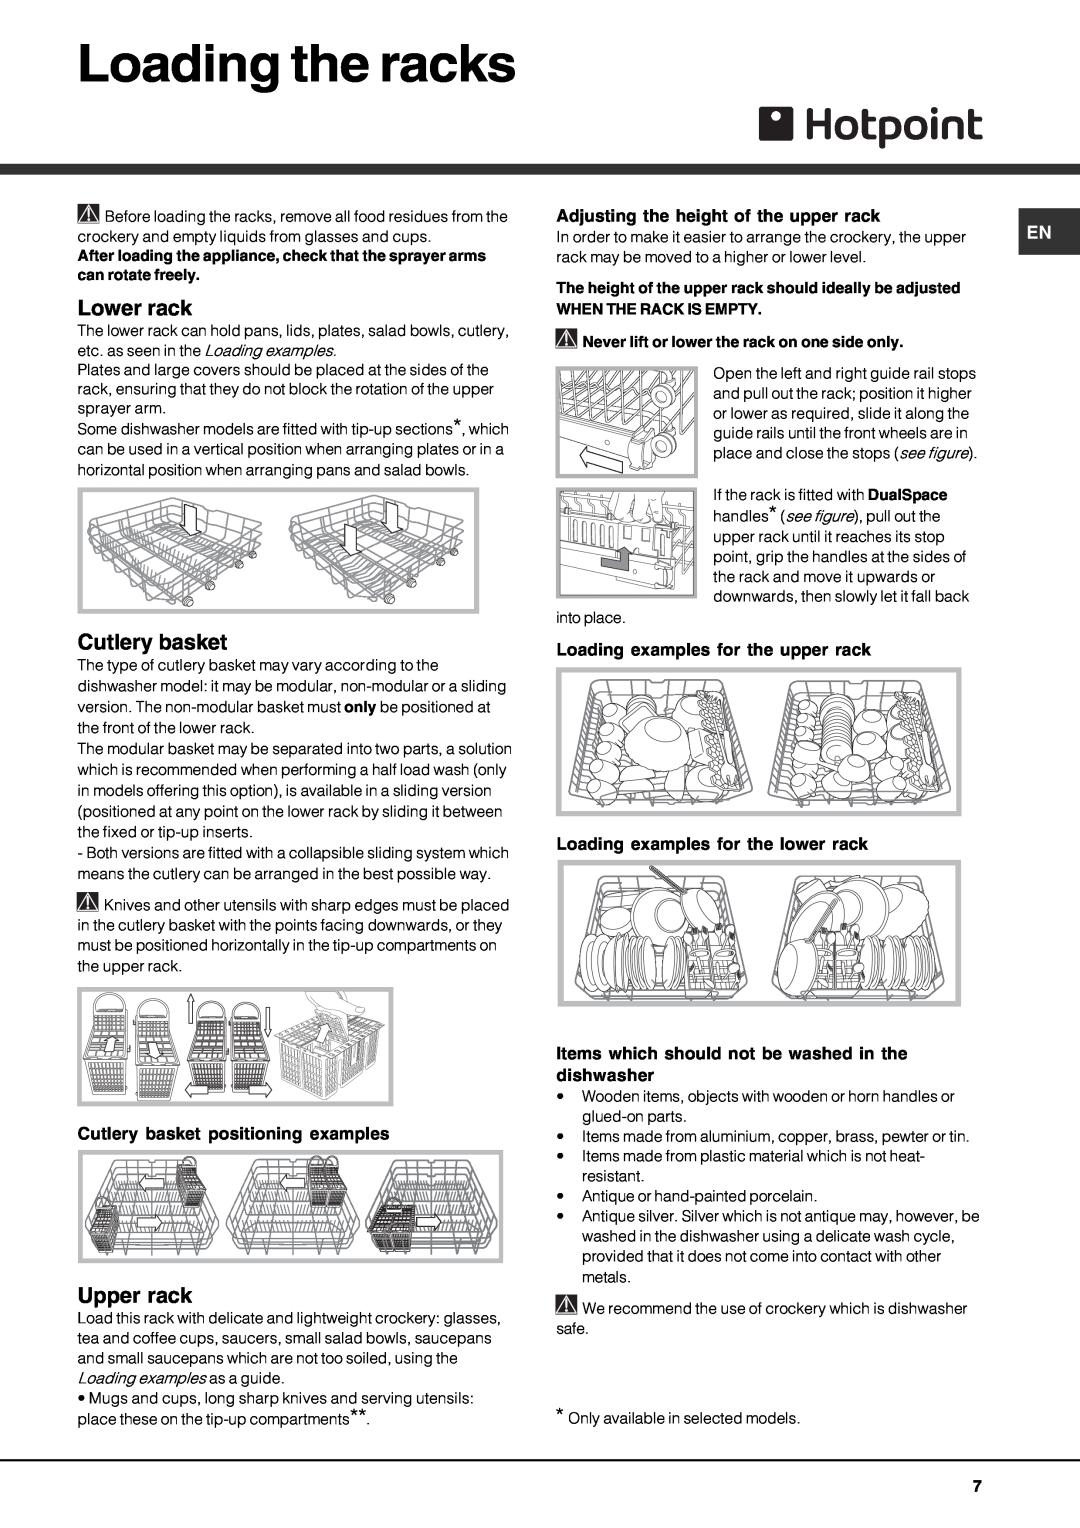 Hotpoint LFT 228 manual Loading the racks, Lower rack, Cutlery basket, Upper rack 